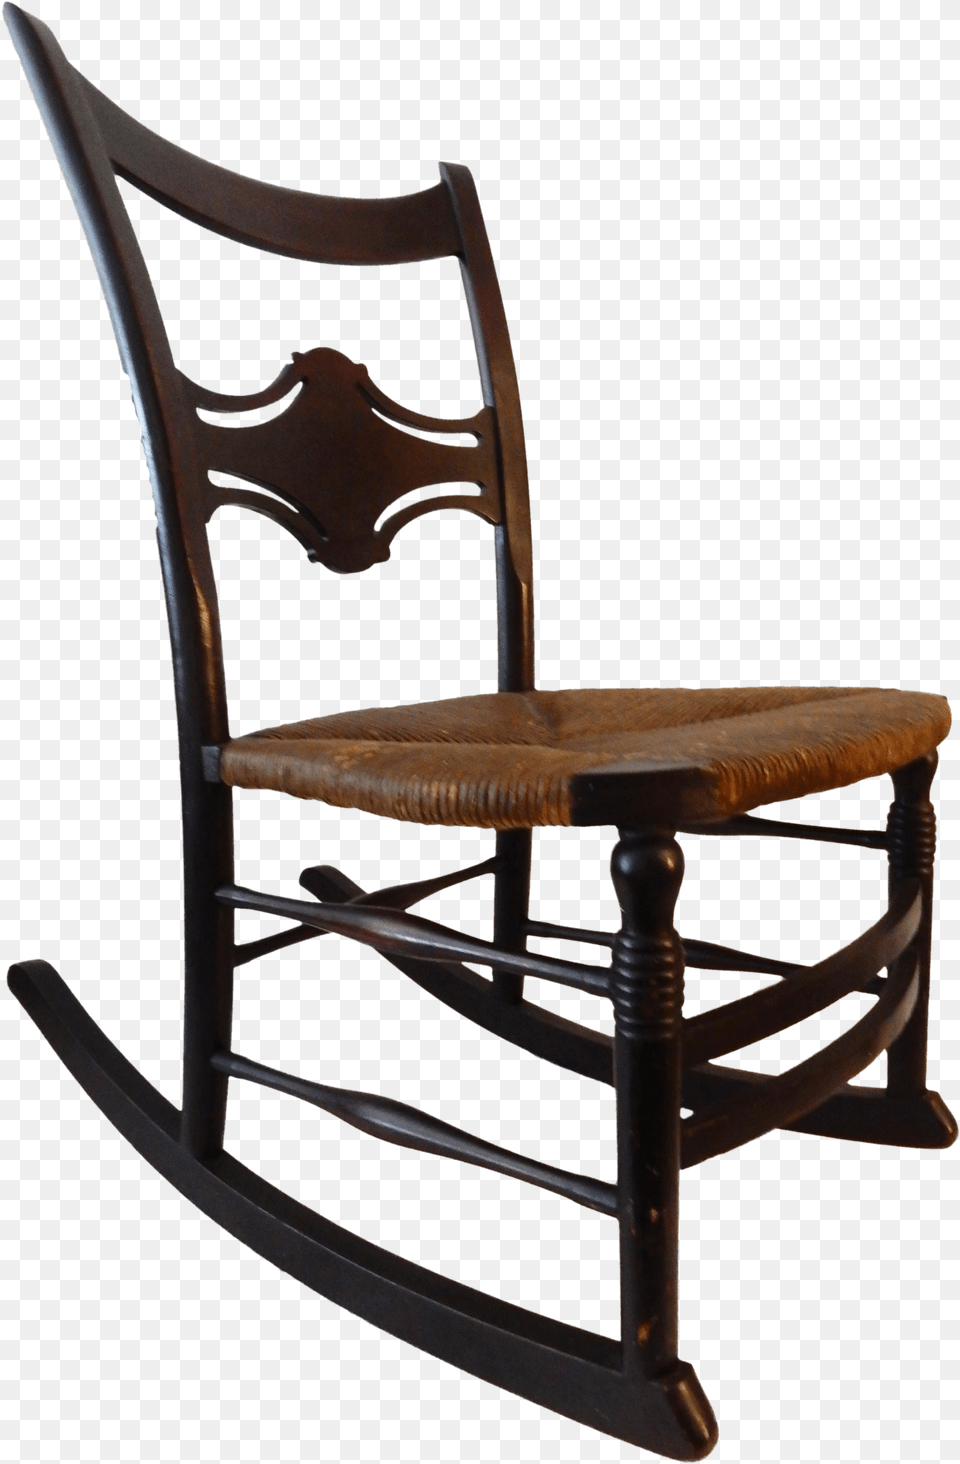 Beautiful Old Armless Rocking Chair Chairish Rh Chairish Armless Rocking Chair Png Image